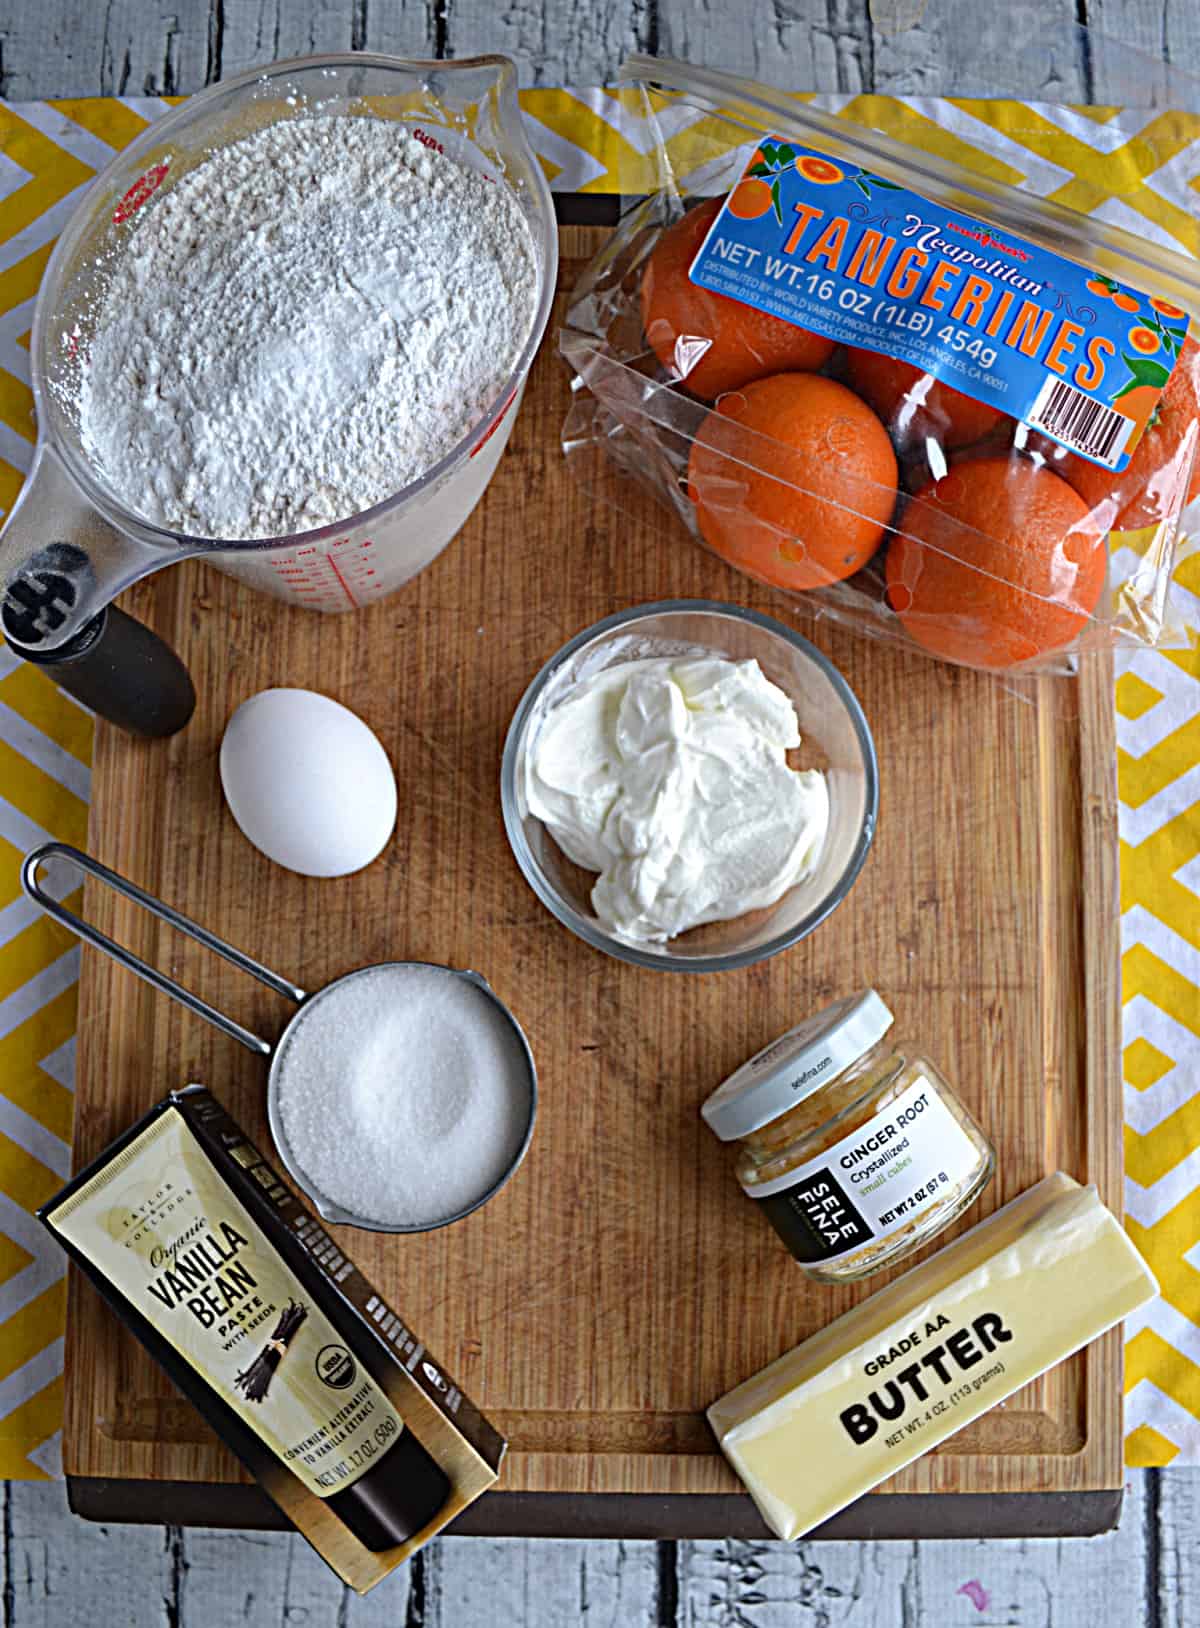 Ingredients for making Tangerine Scones.